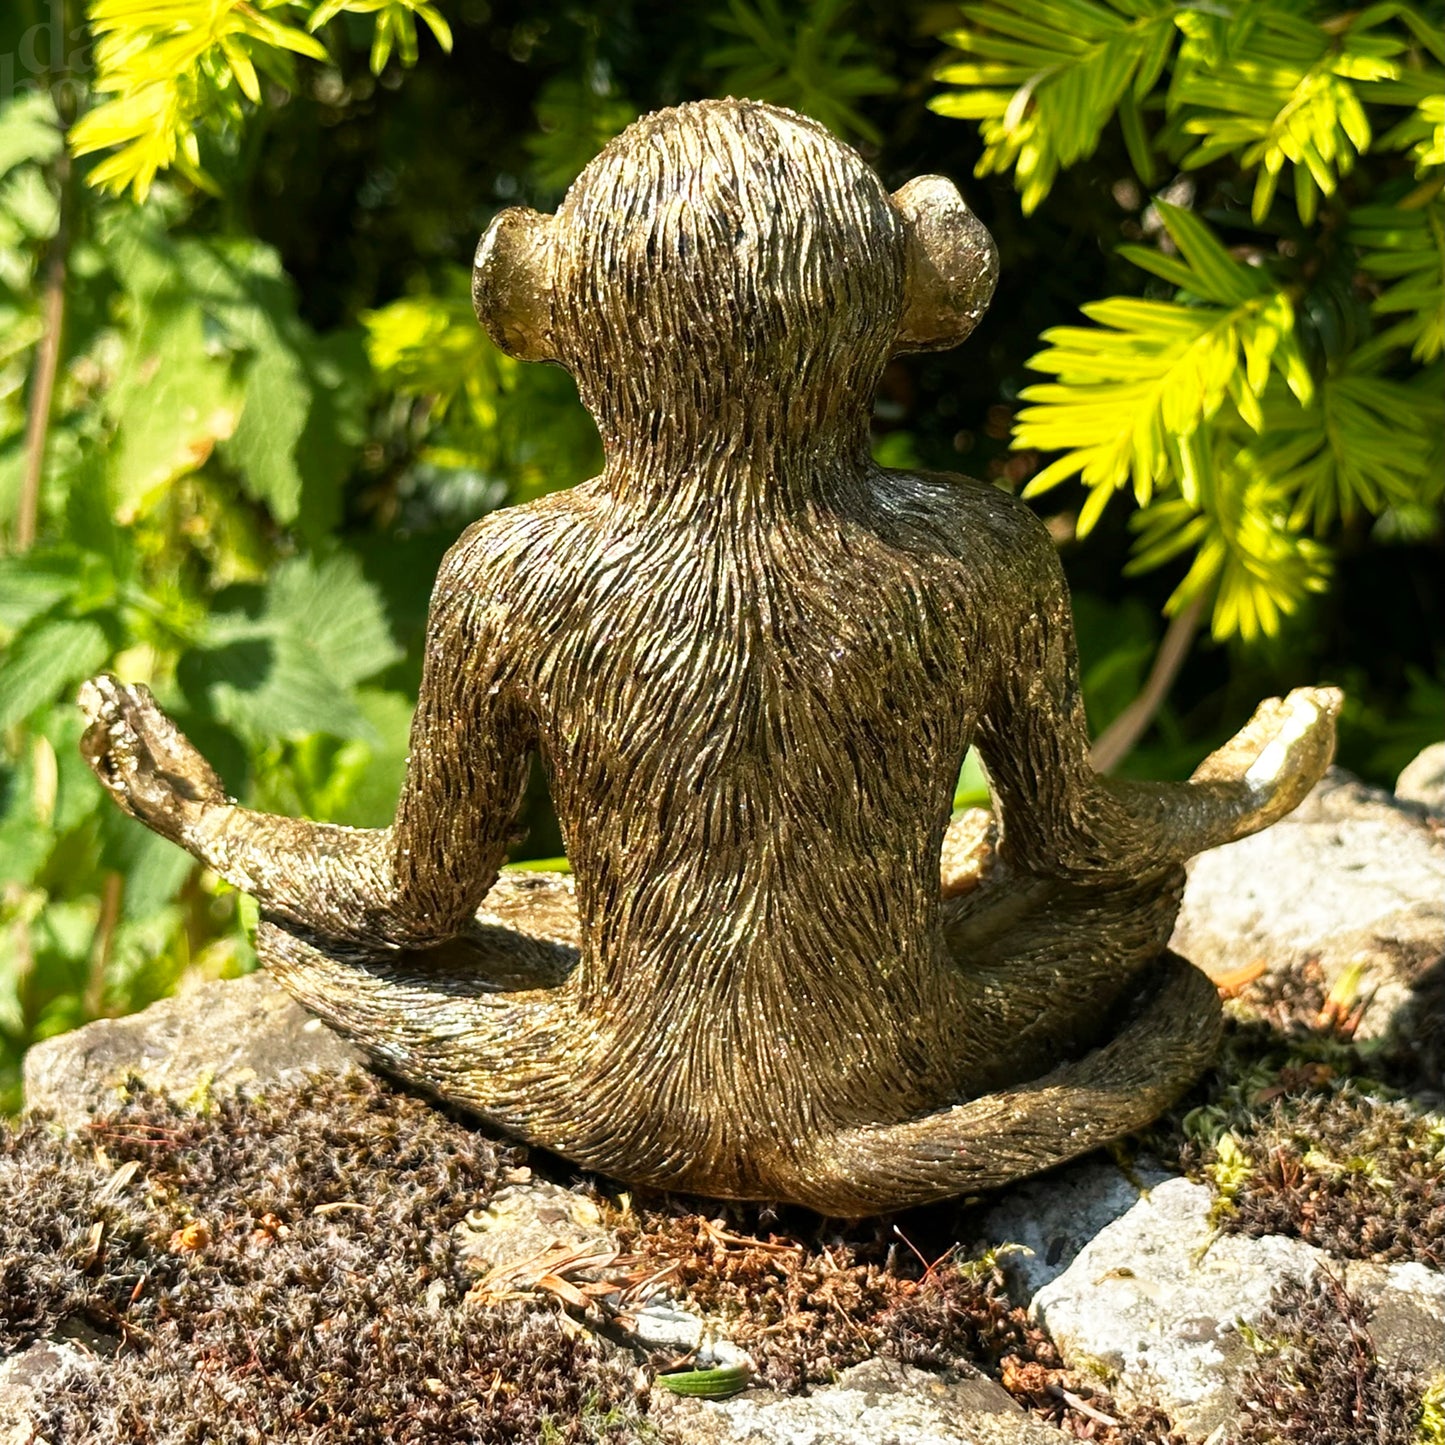 Gold Yoga Monkey Figurine A